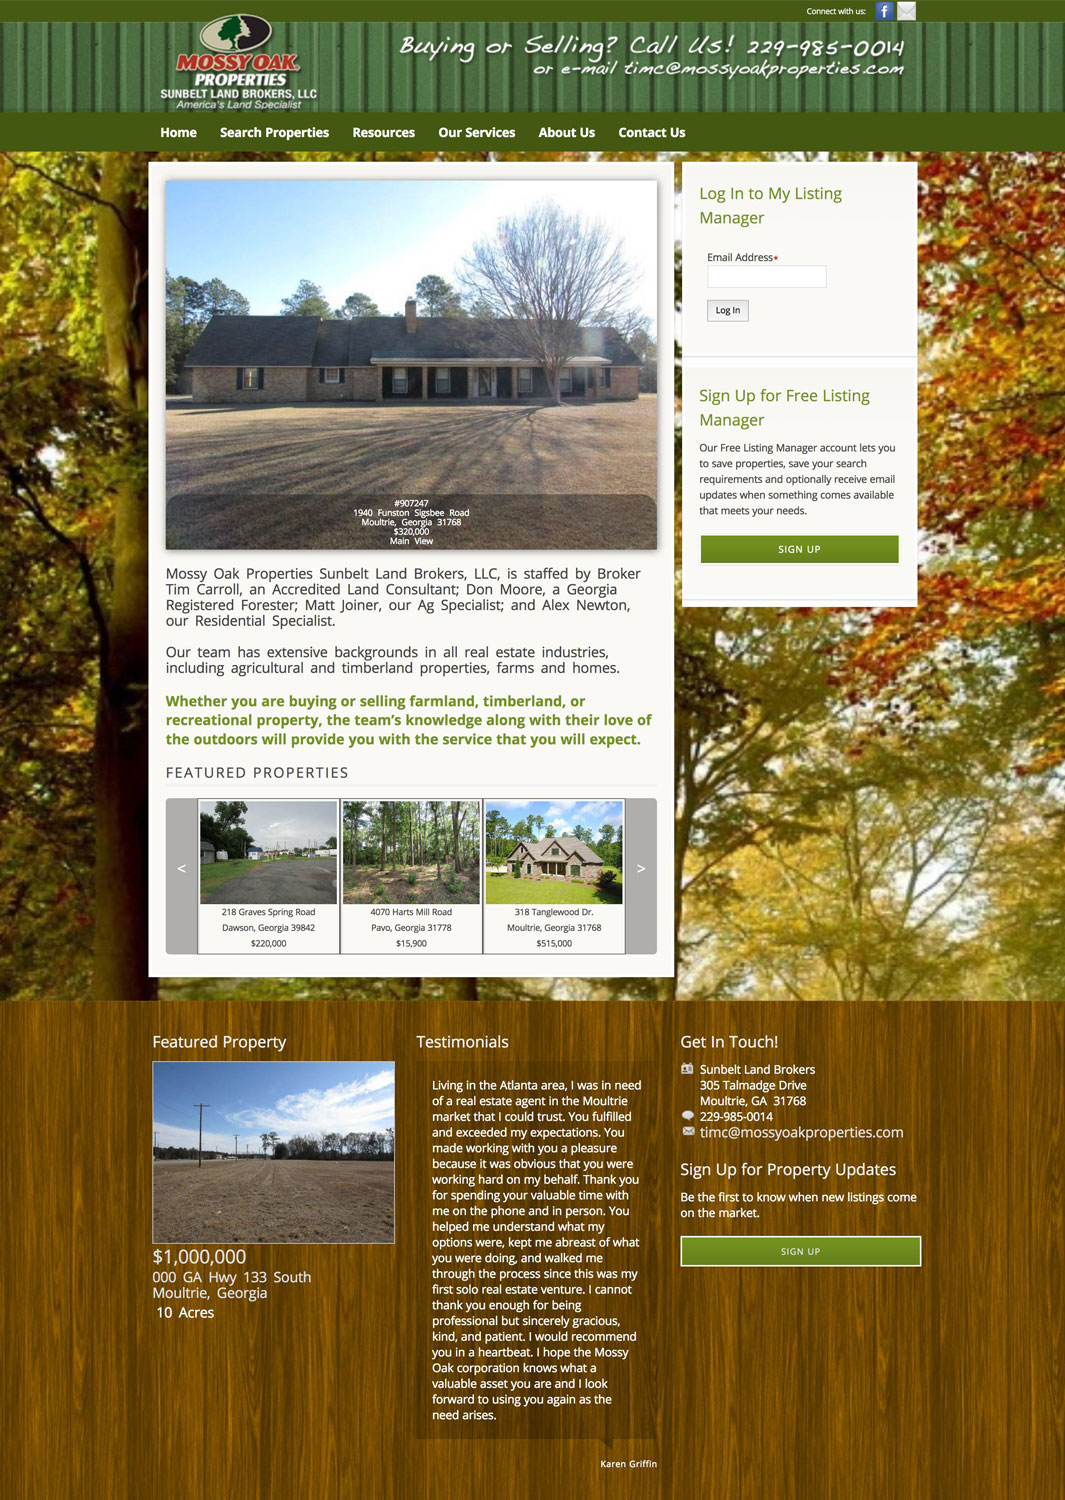 Mossy Oak Properties Sunbelt Land Brokers MLS Real Estate Website